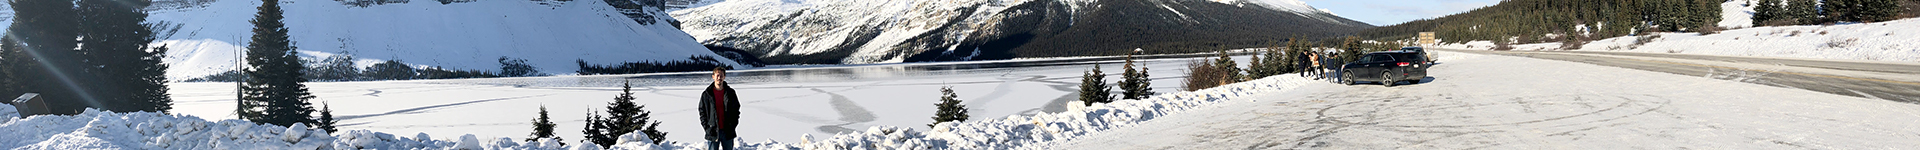 Bow Lake, Banff, Canada